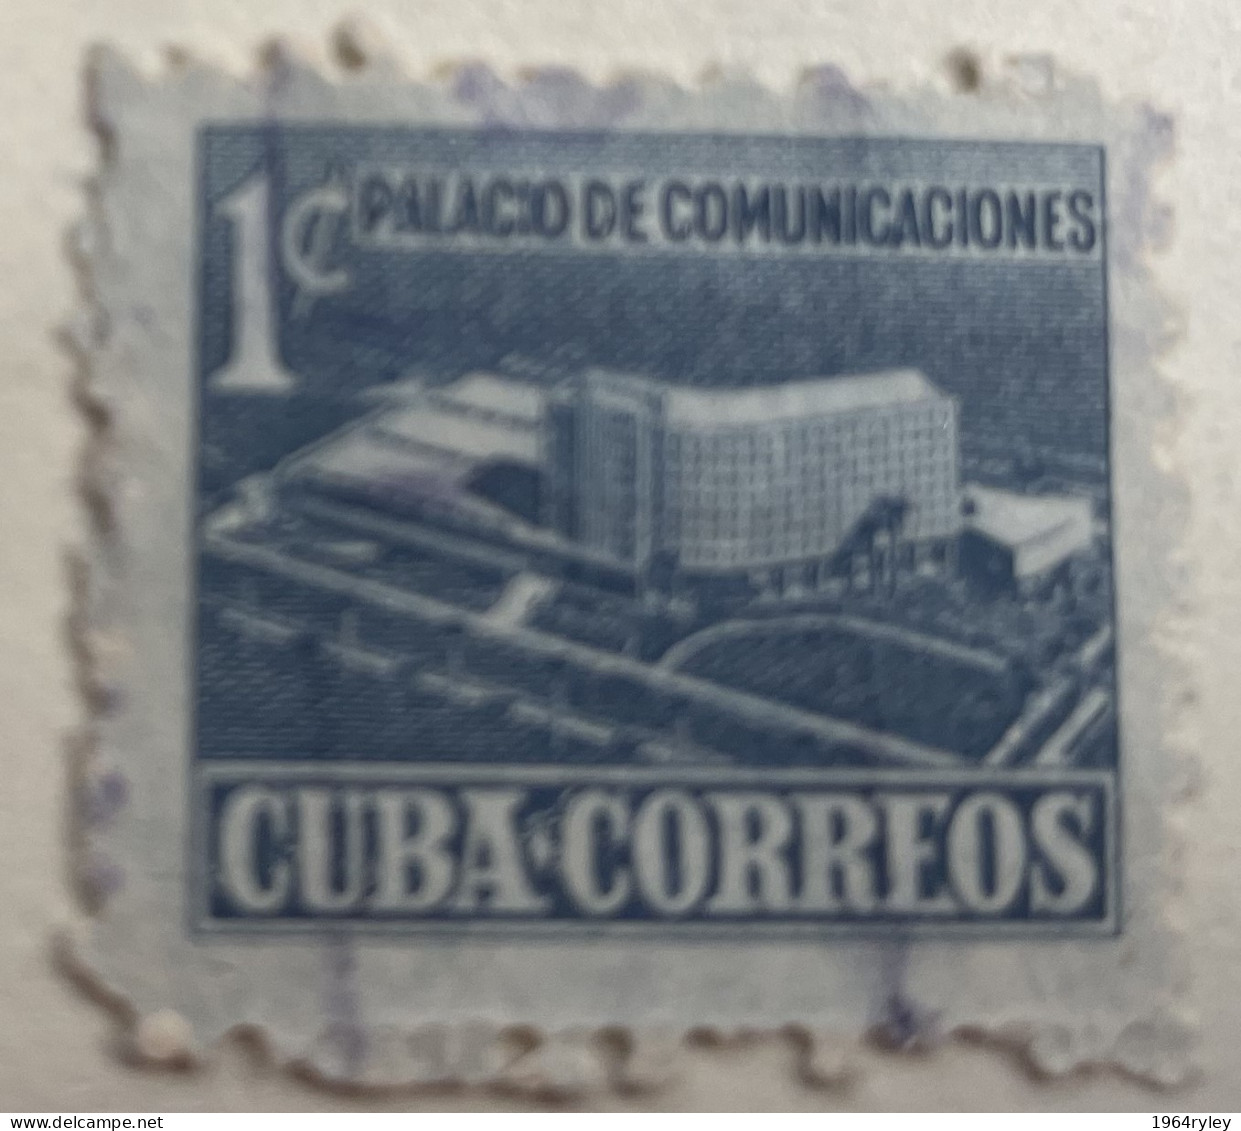 CUBA - (0) - 1952  -   # RA 16 - Usati